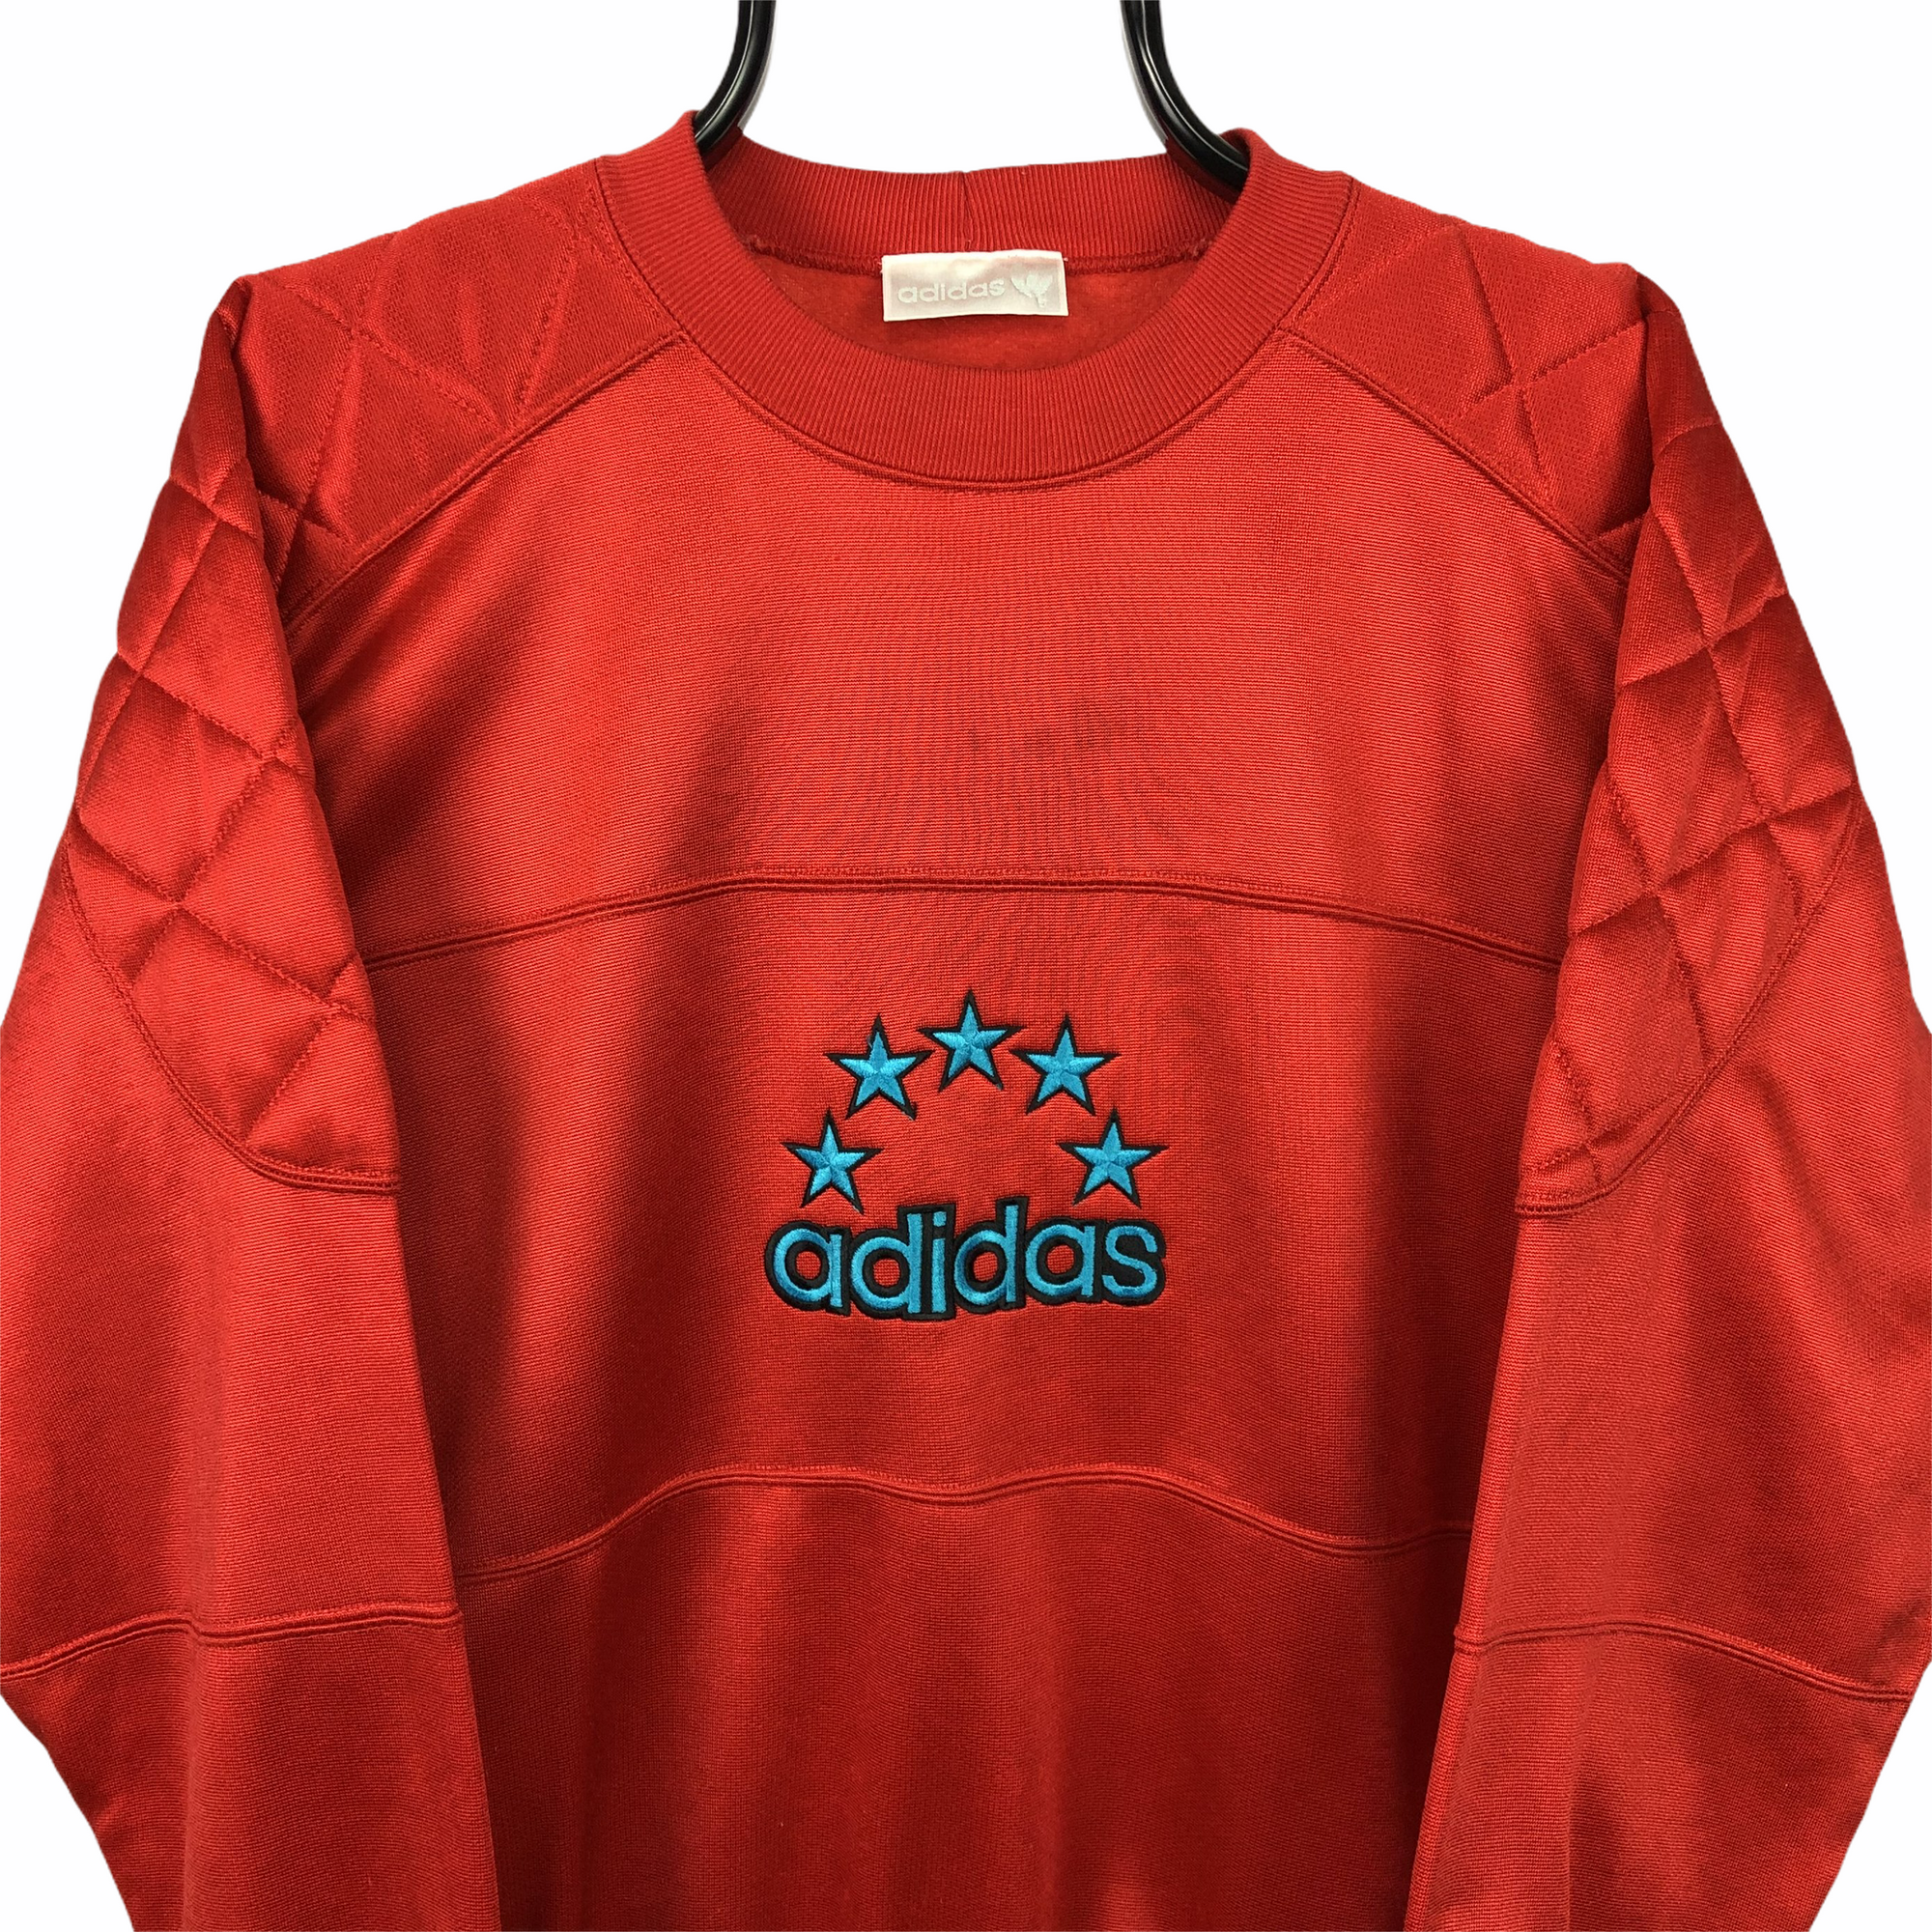 Vintage 80s Adidas Spellout Sweatshirt - Men's Medium/Women's Large